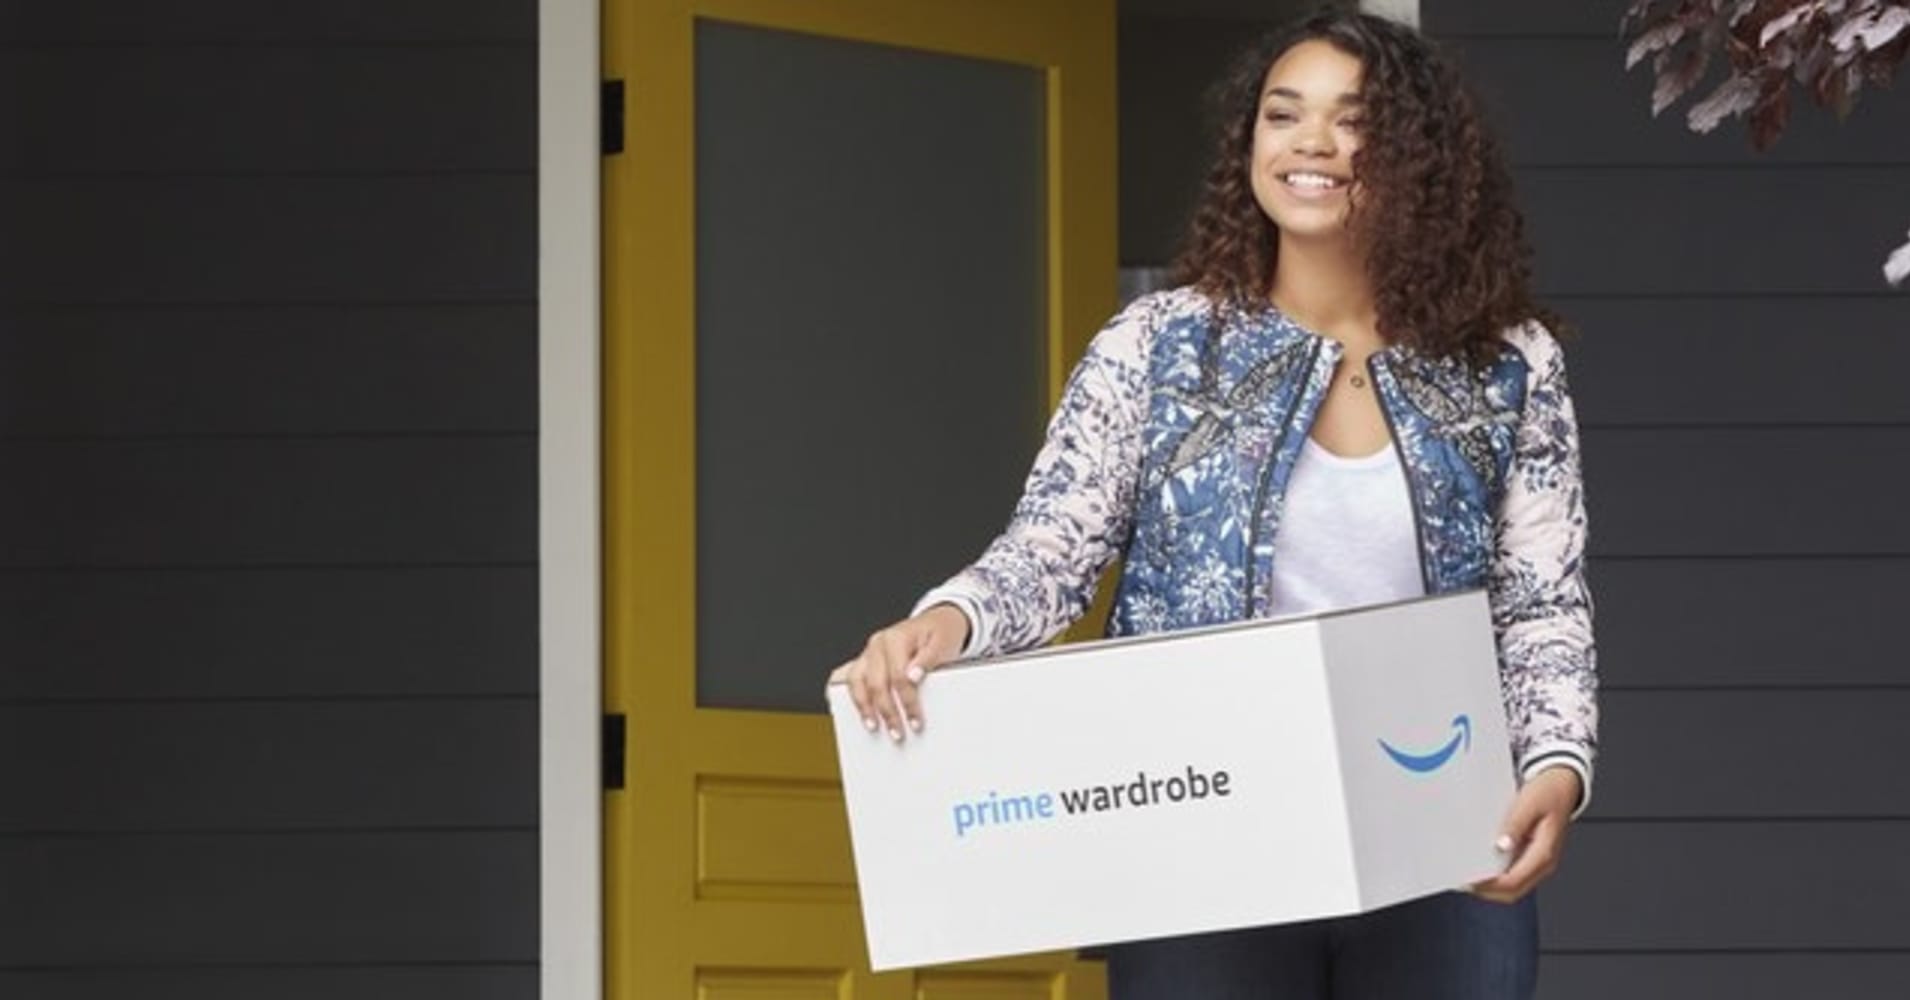 Amazon announces Prime Wardrobe, tackling fashion retail head on - CNBC